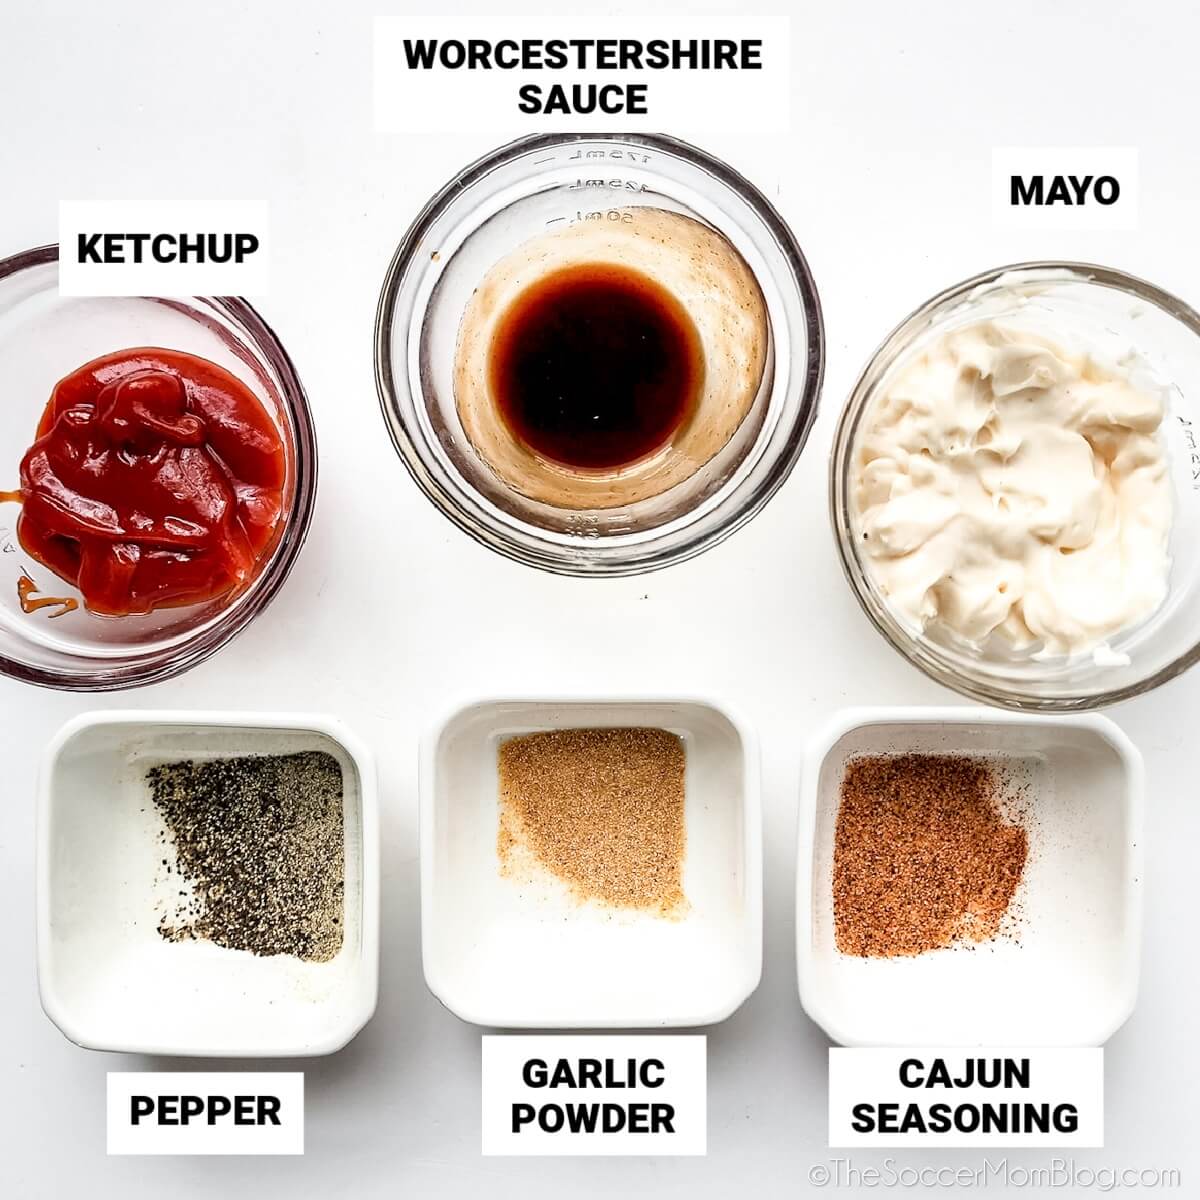 Copycat Raising Cane's Sauce ingredients: ketchup, Worcestershire, mayo, pepper, garlic powder, and cajun seasoning.